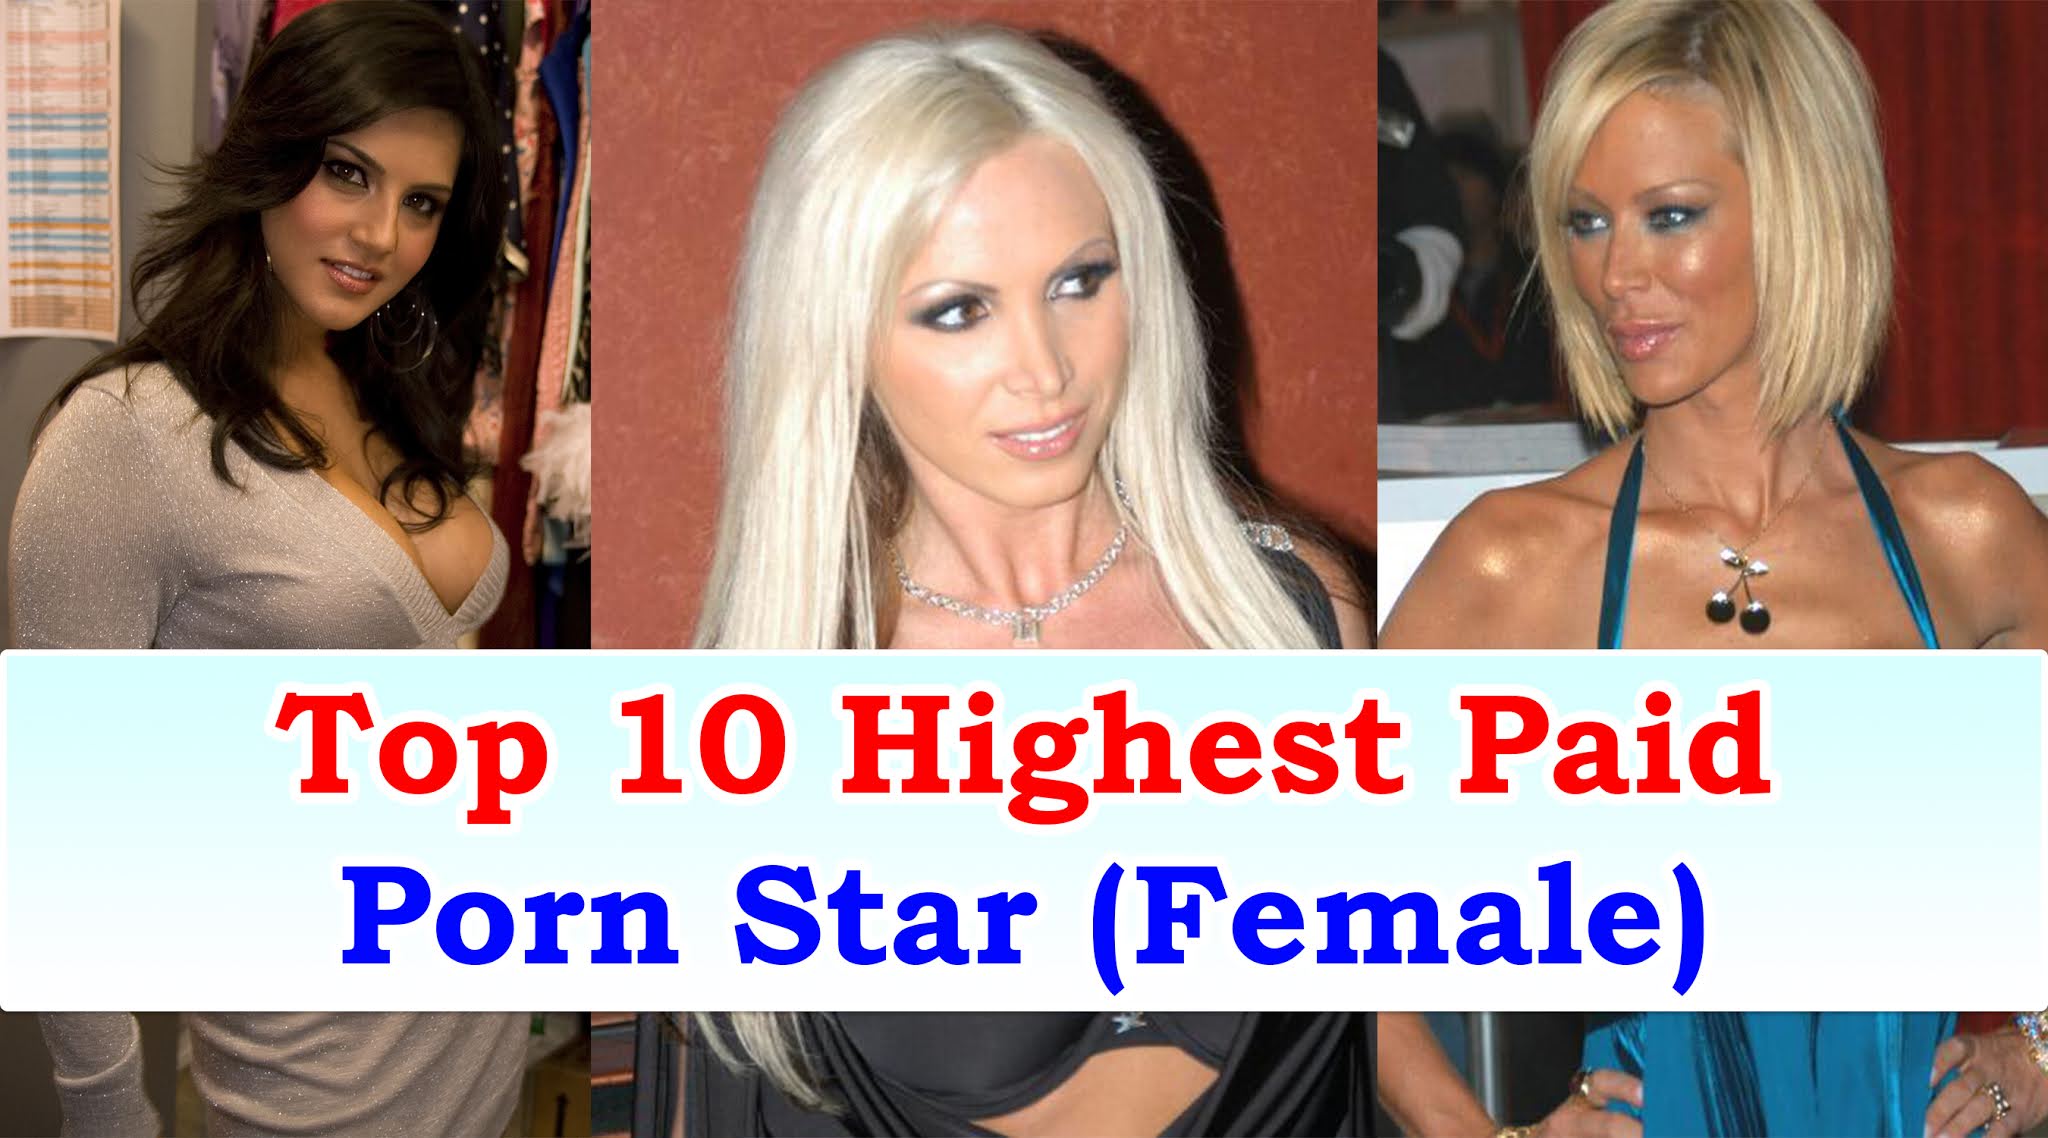 Top 5 highest paid porn stars